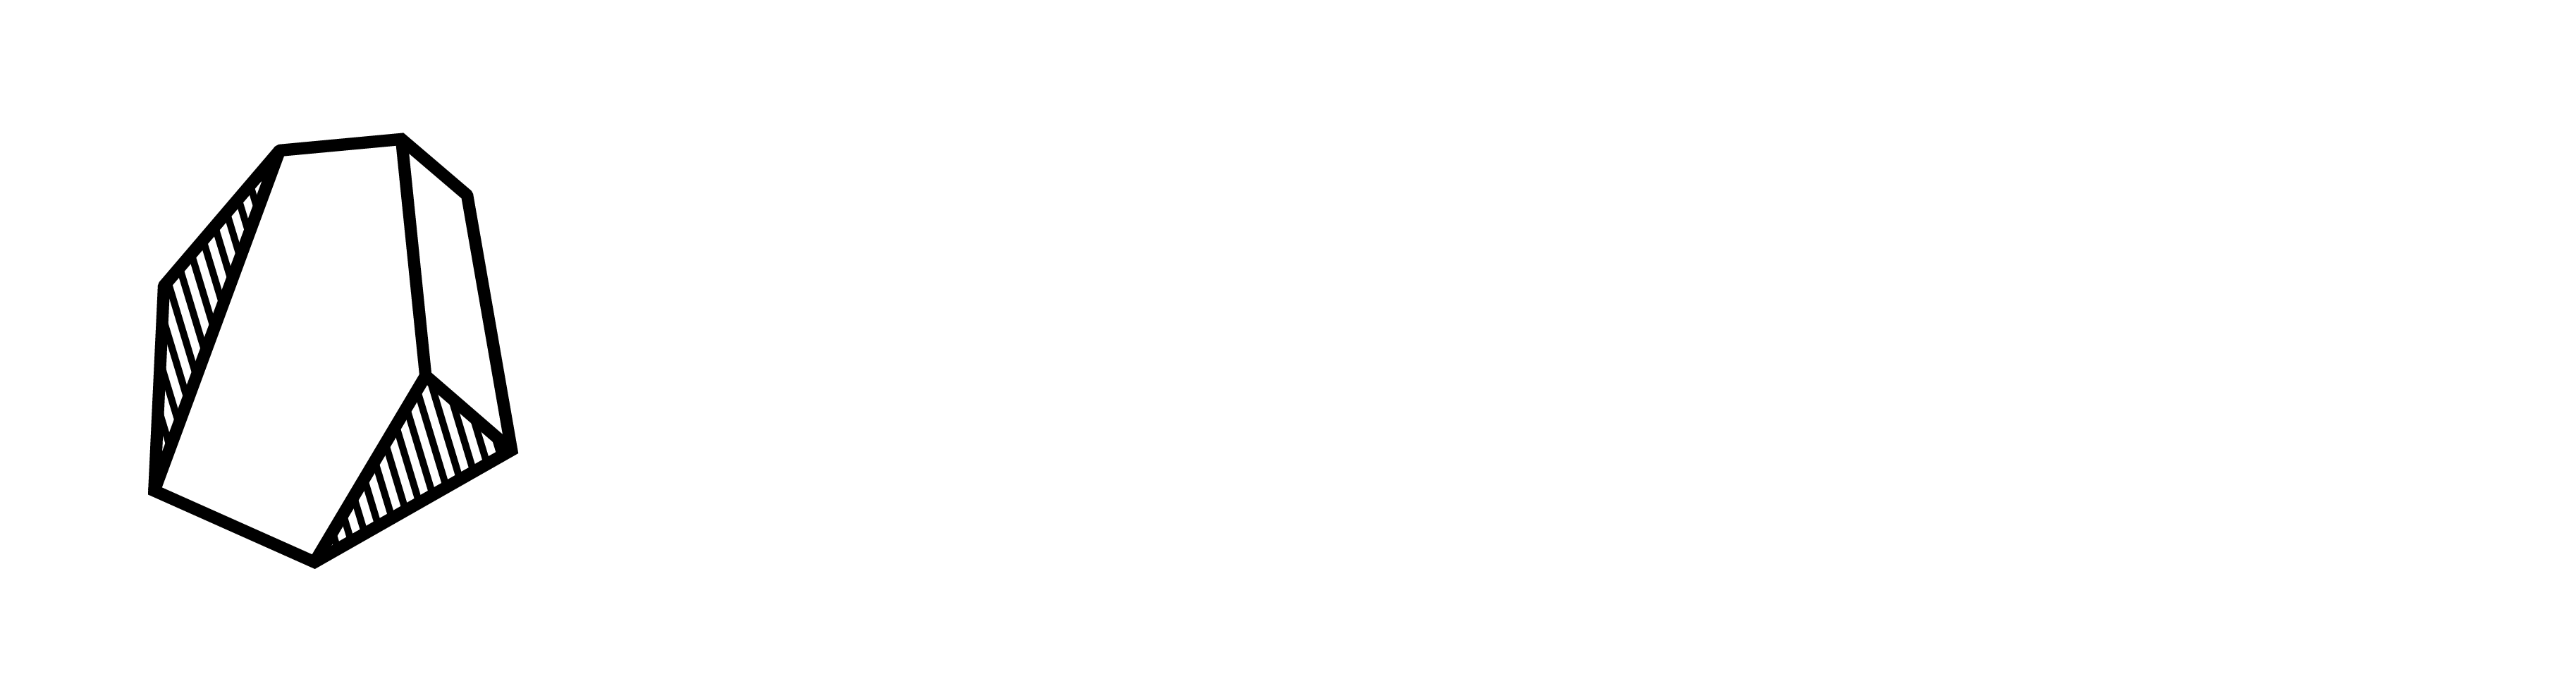 RockNRG logo